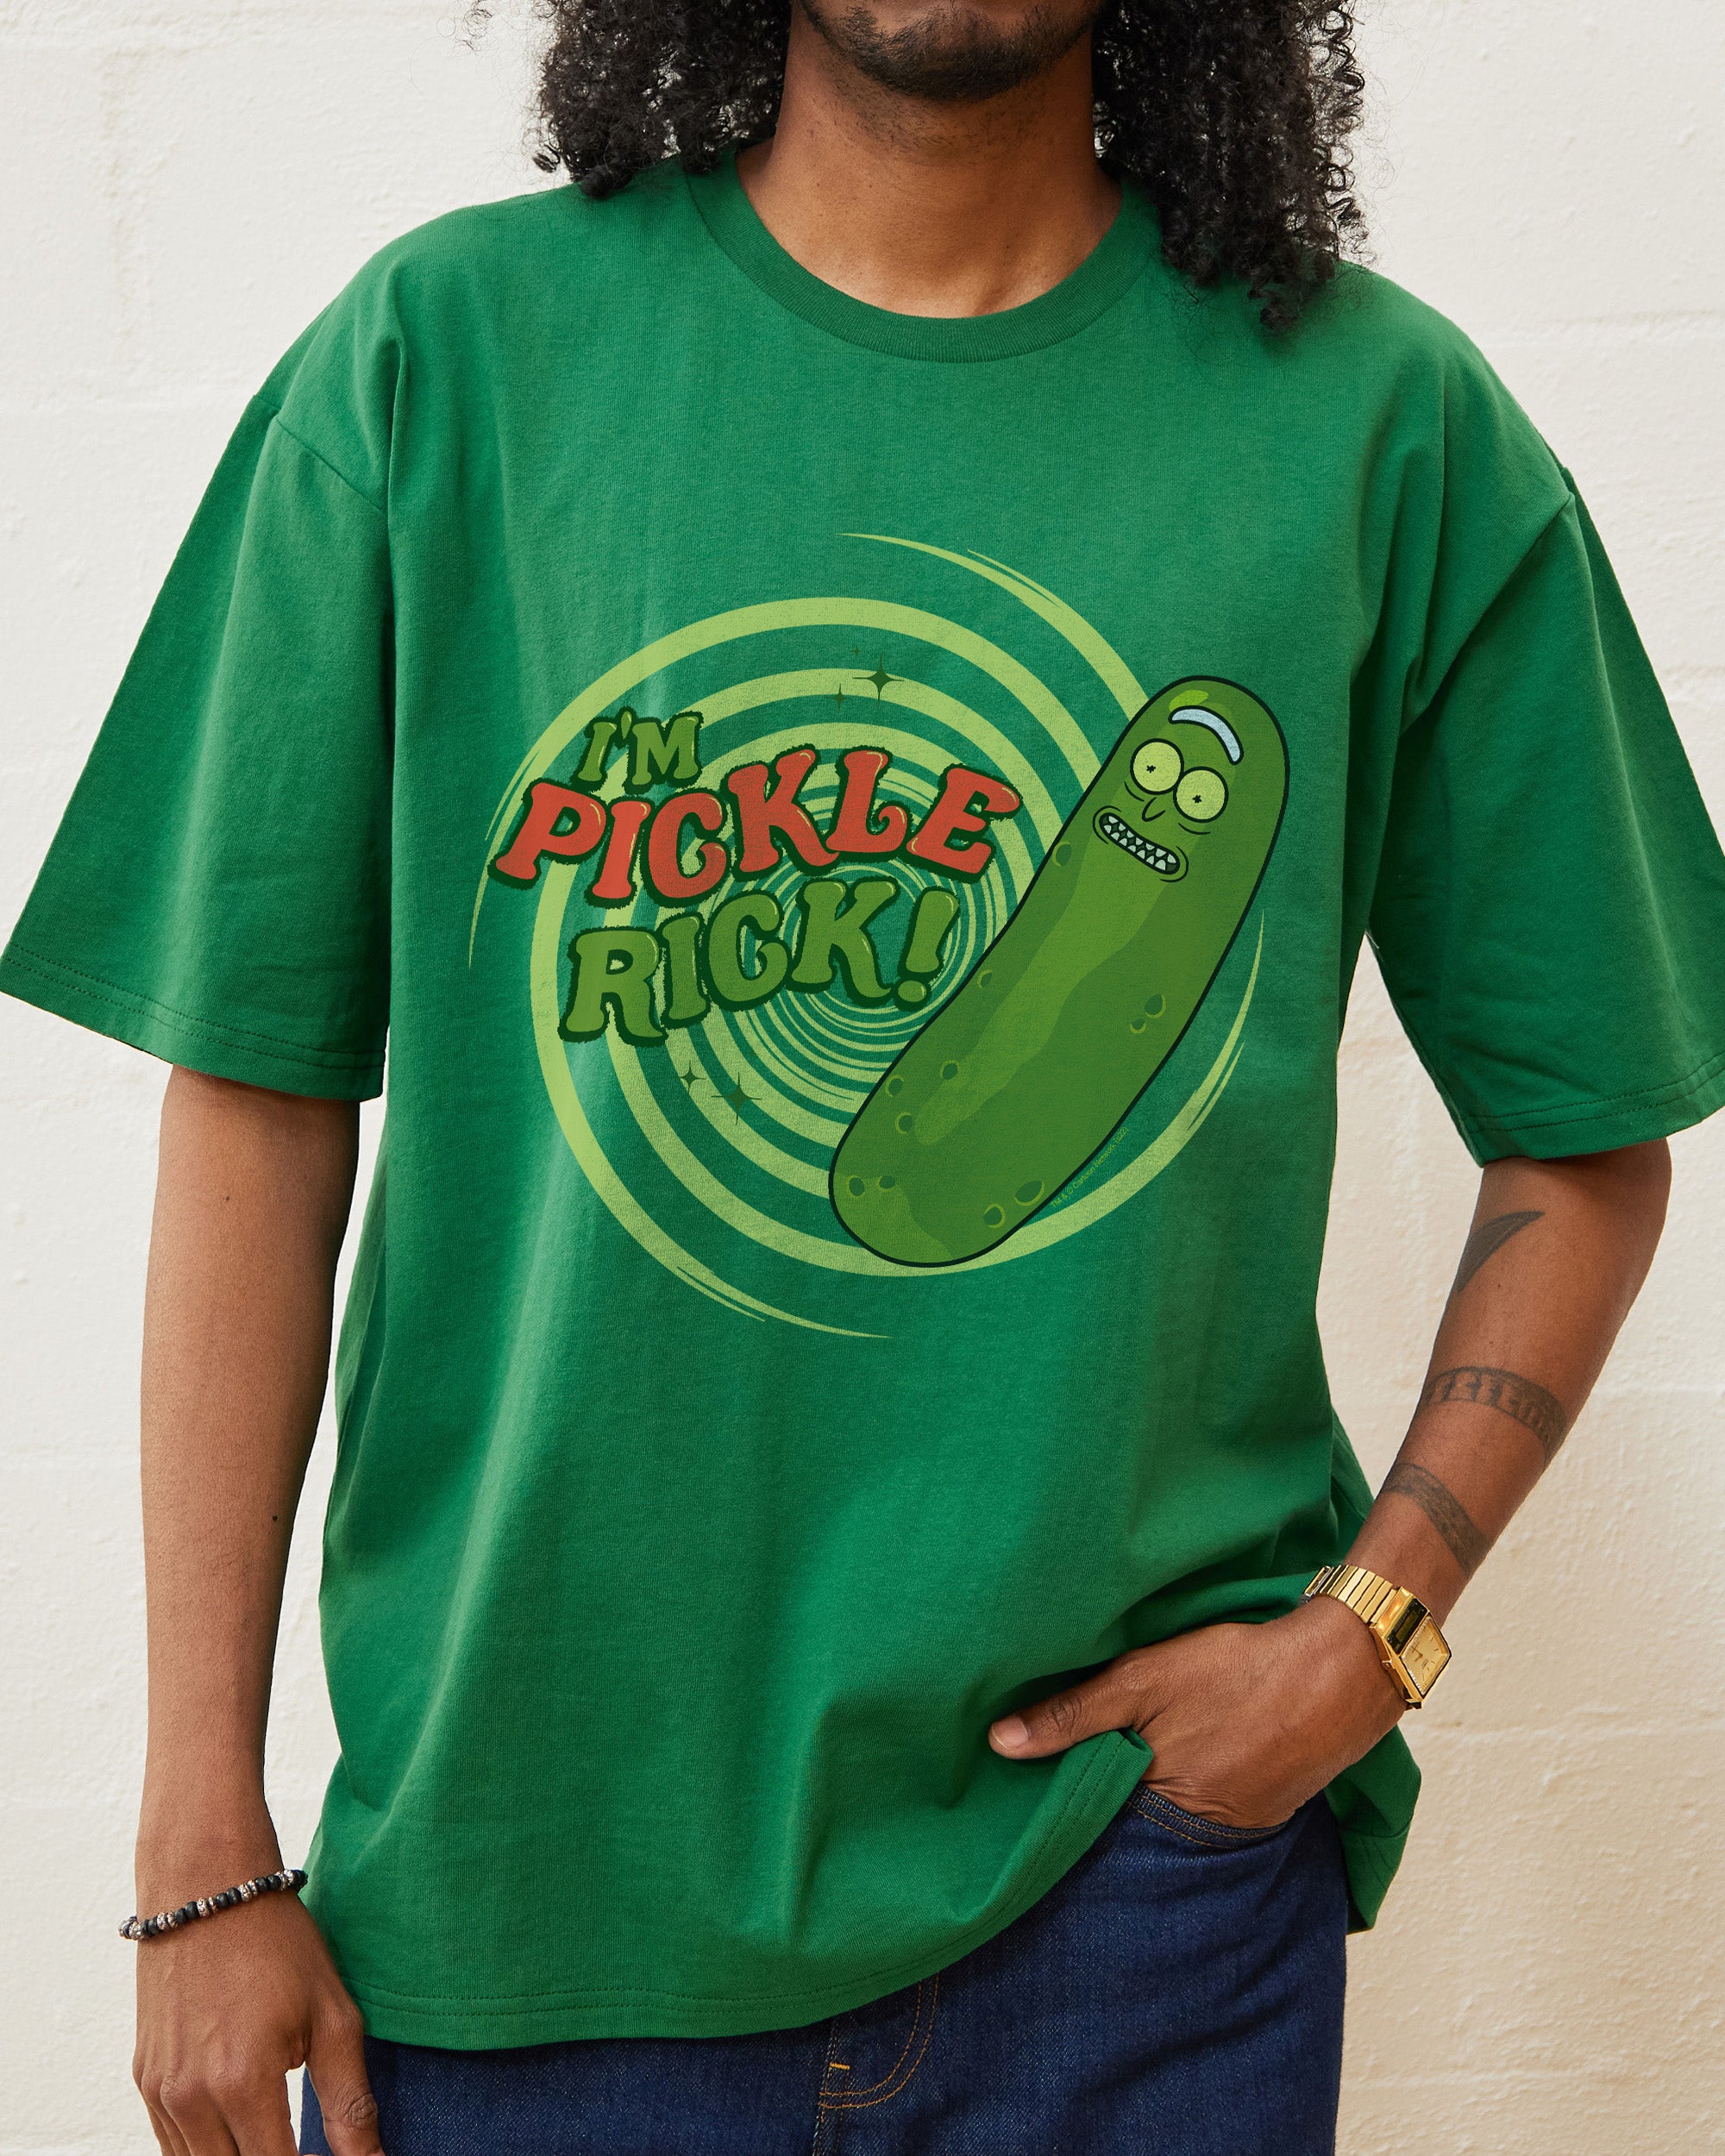 Pickle Rick T-Shirt